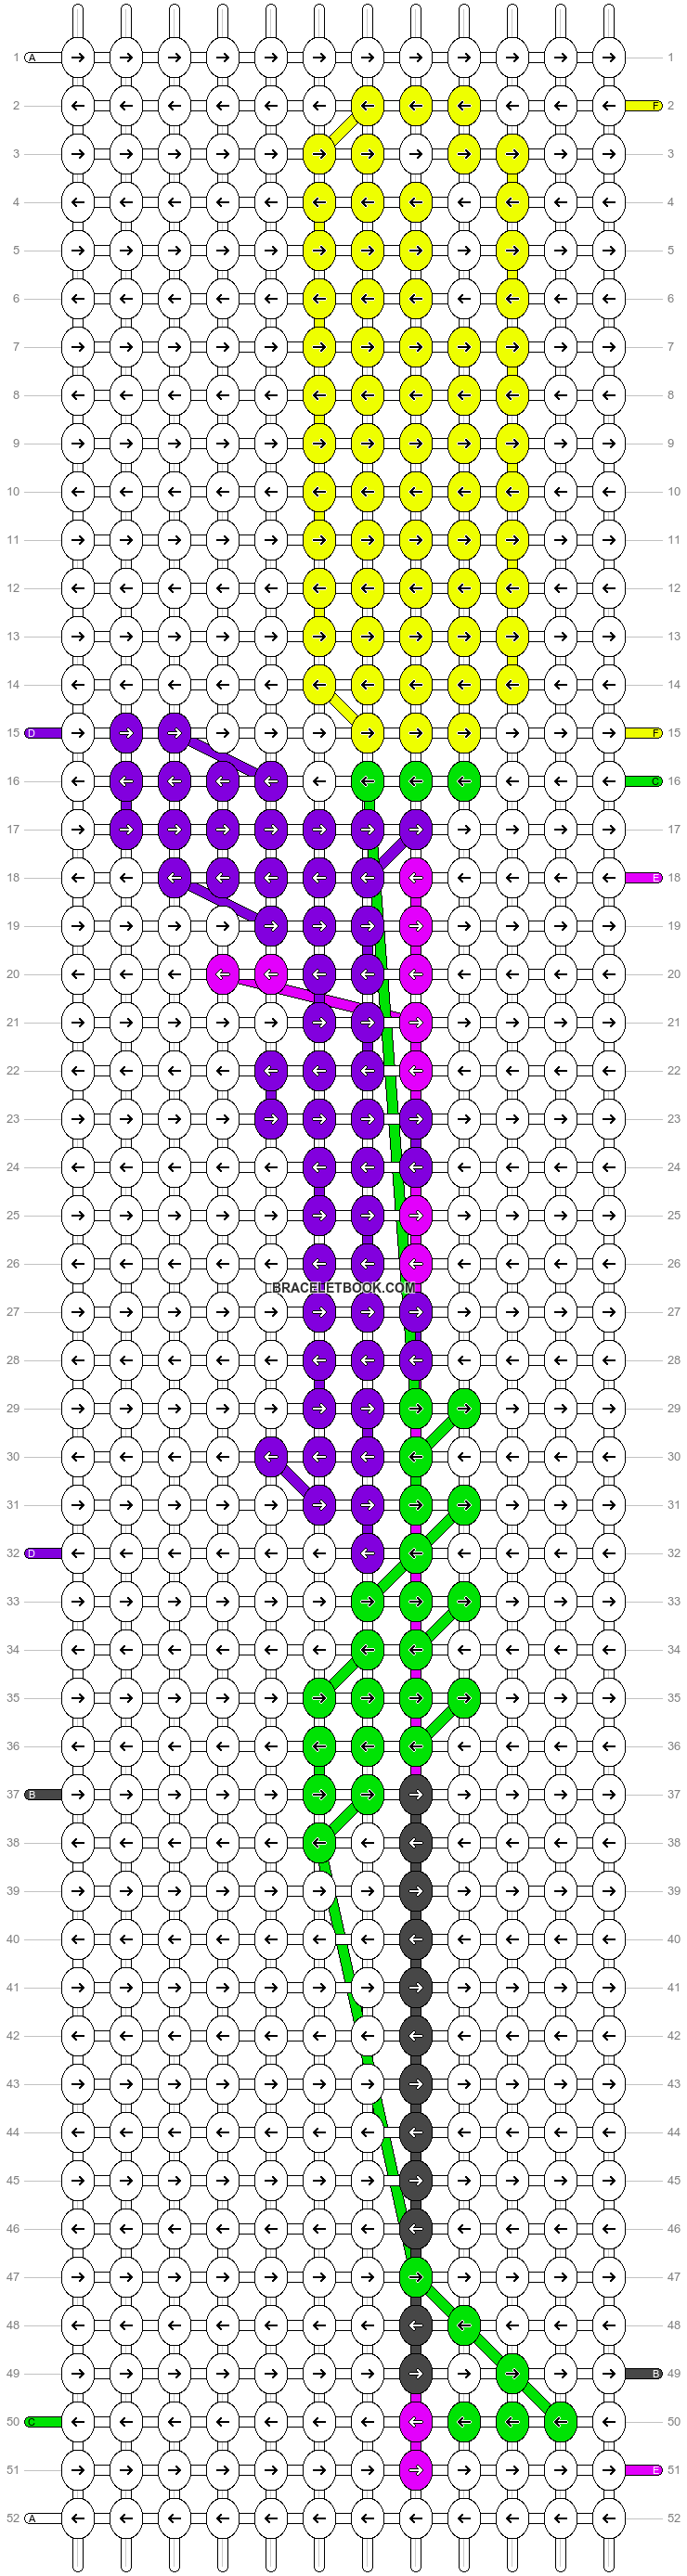 Alpha pattern #35334 pattern